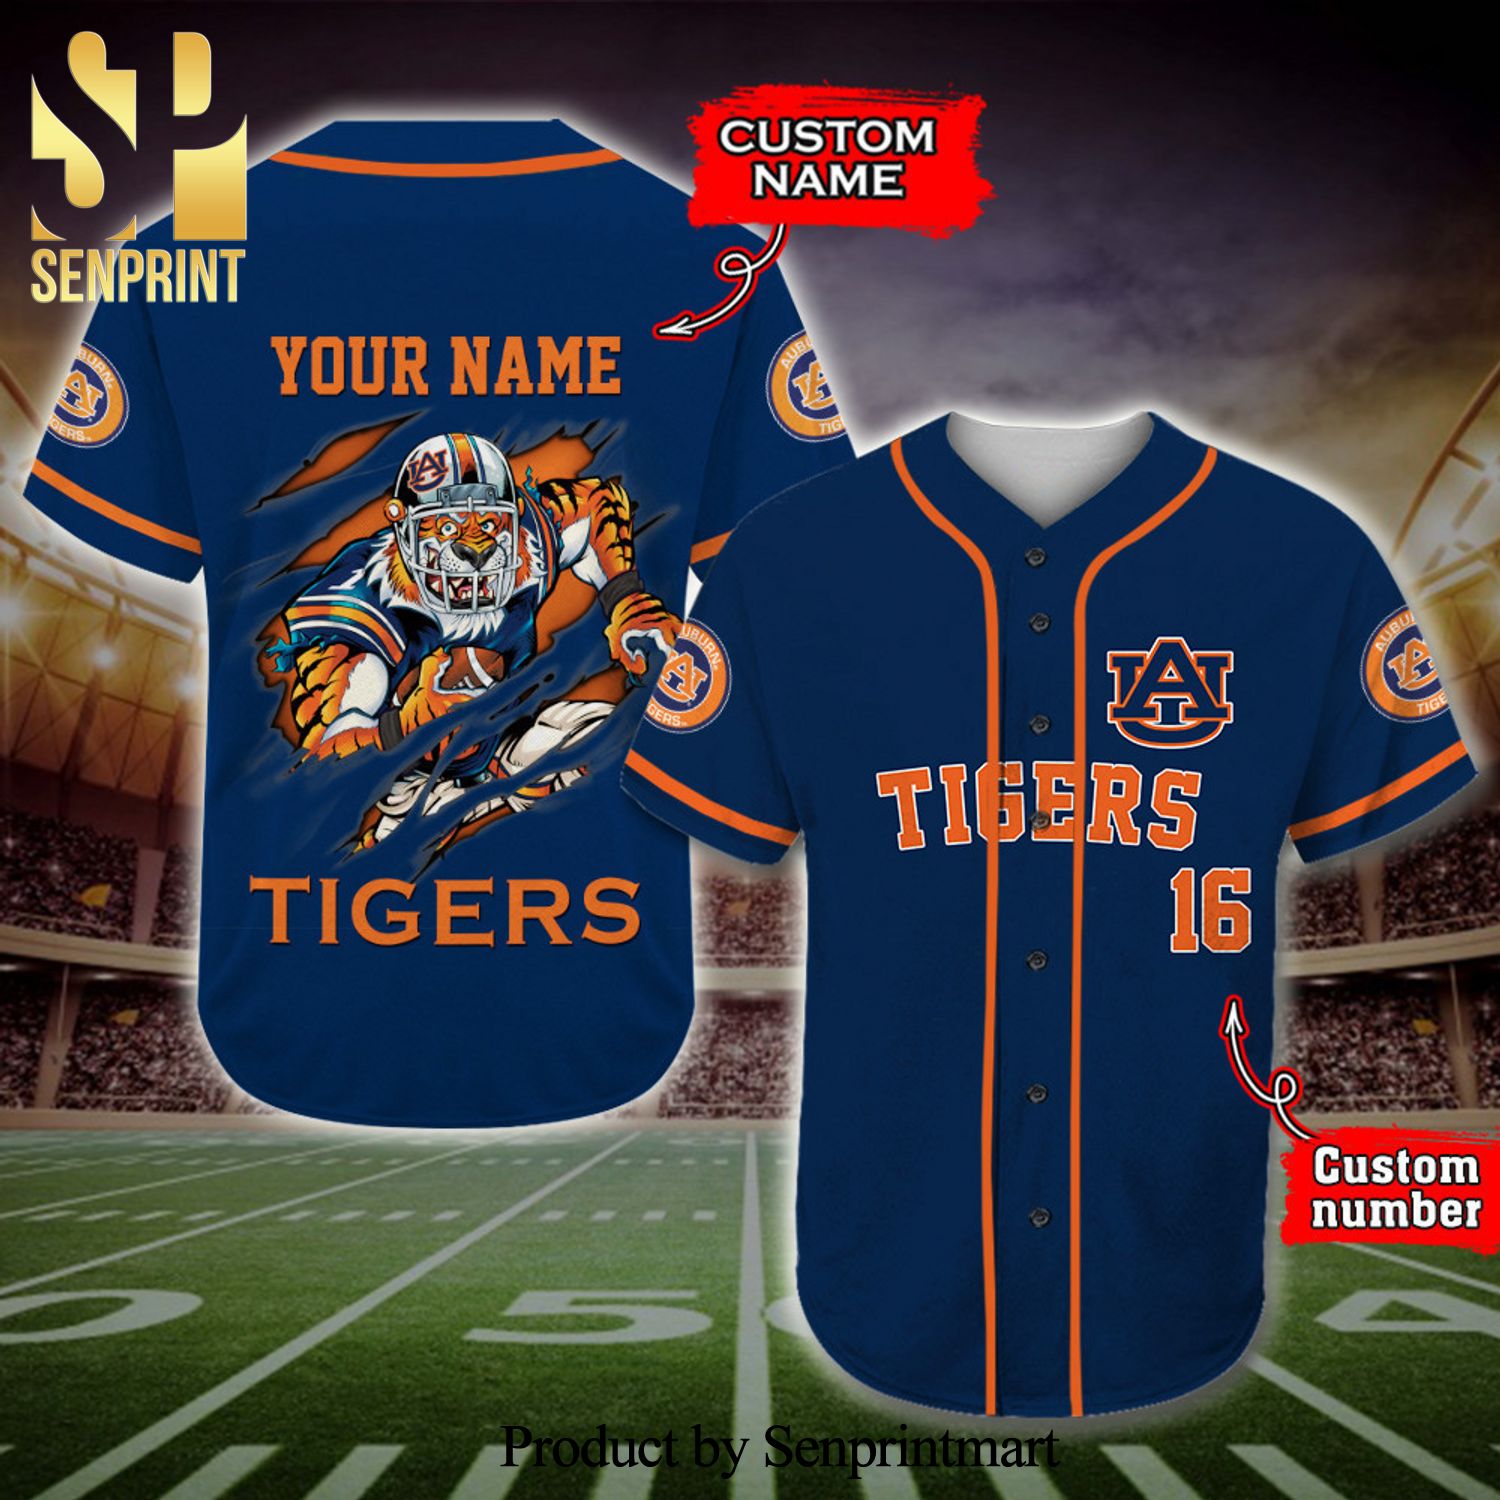 Personalized Auburn Tigers Mascot Full Printing Baseball Jersey – Navy